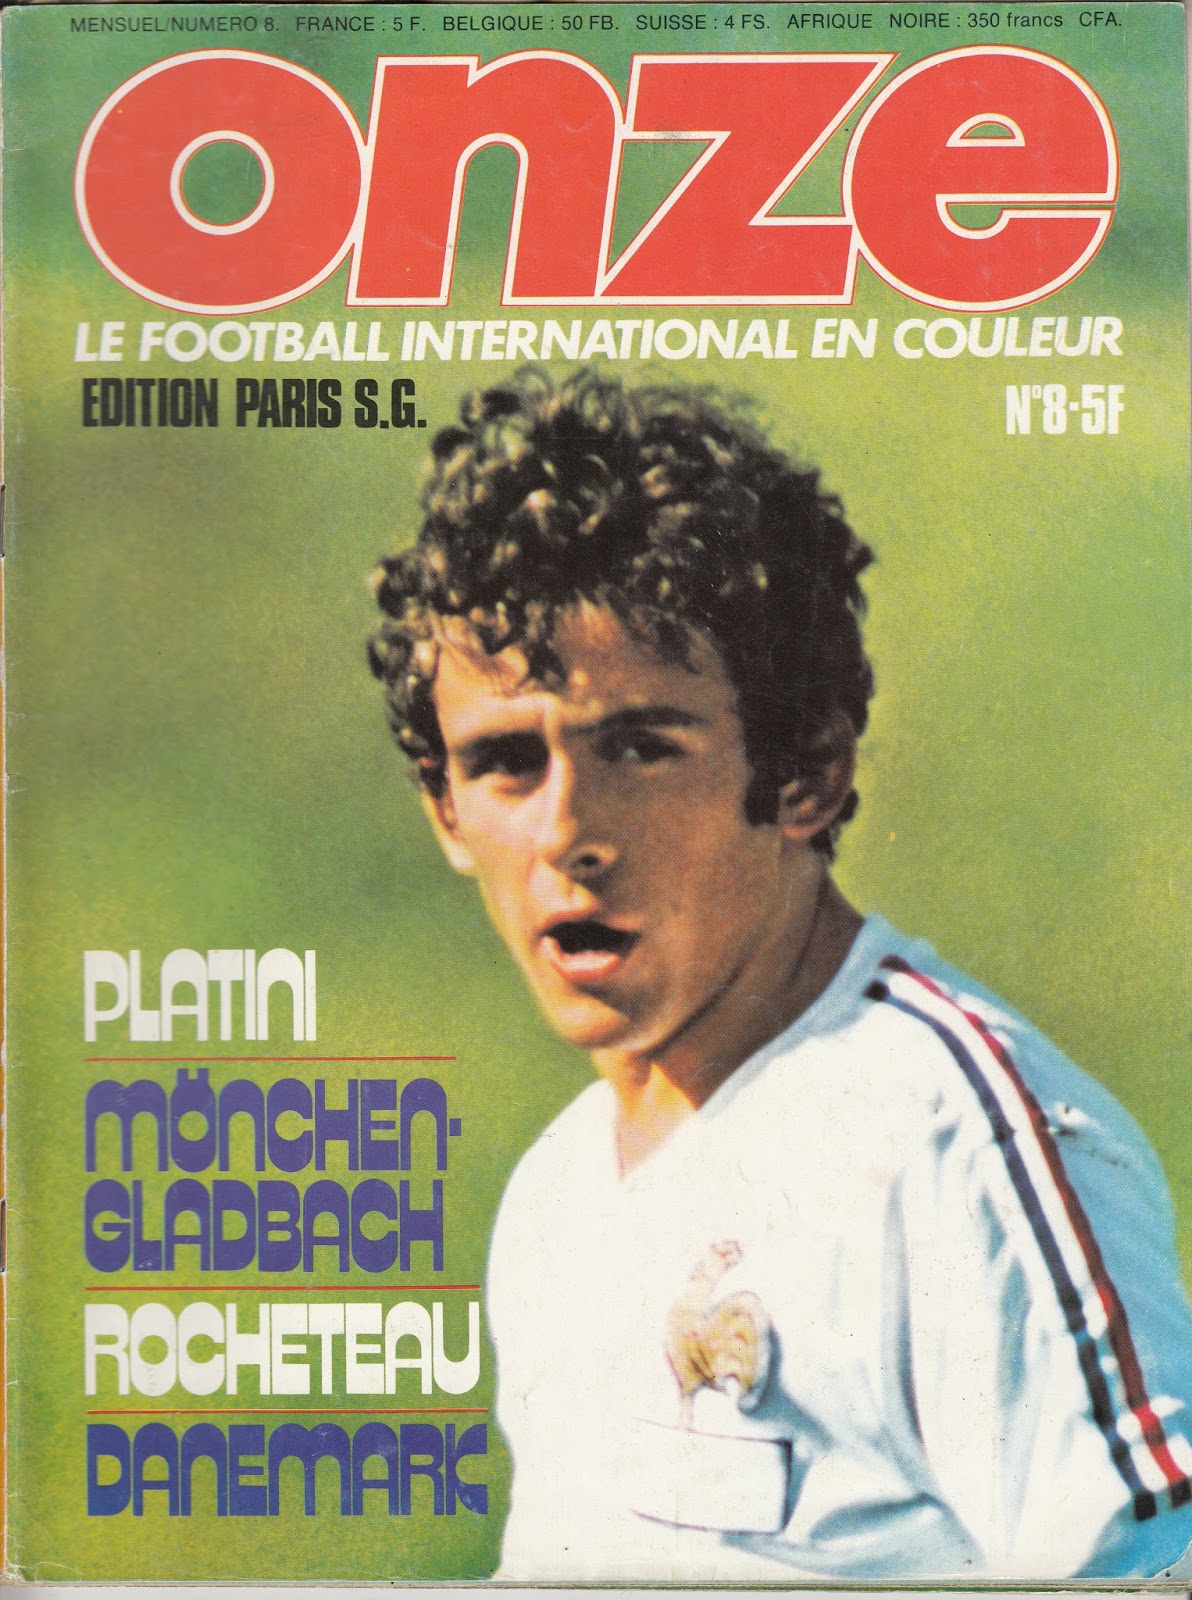 Part magazine. Журнал onze. Обложки журналов ретро футбол. Журнал футбол 1986. Футбольные журналы 2006 года фото.